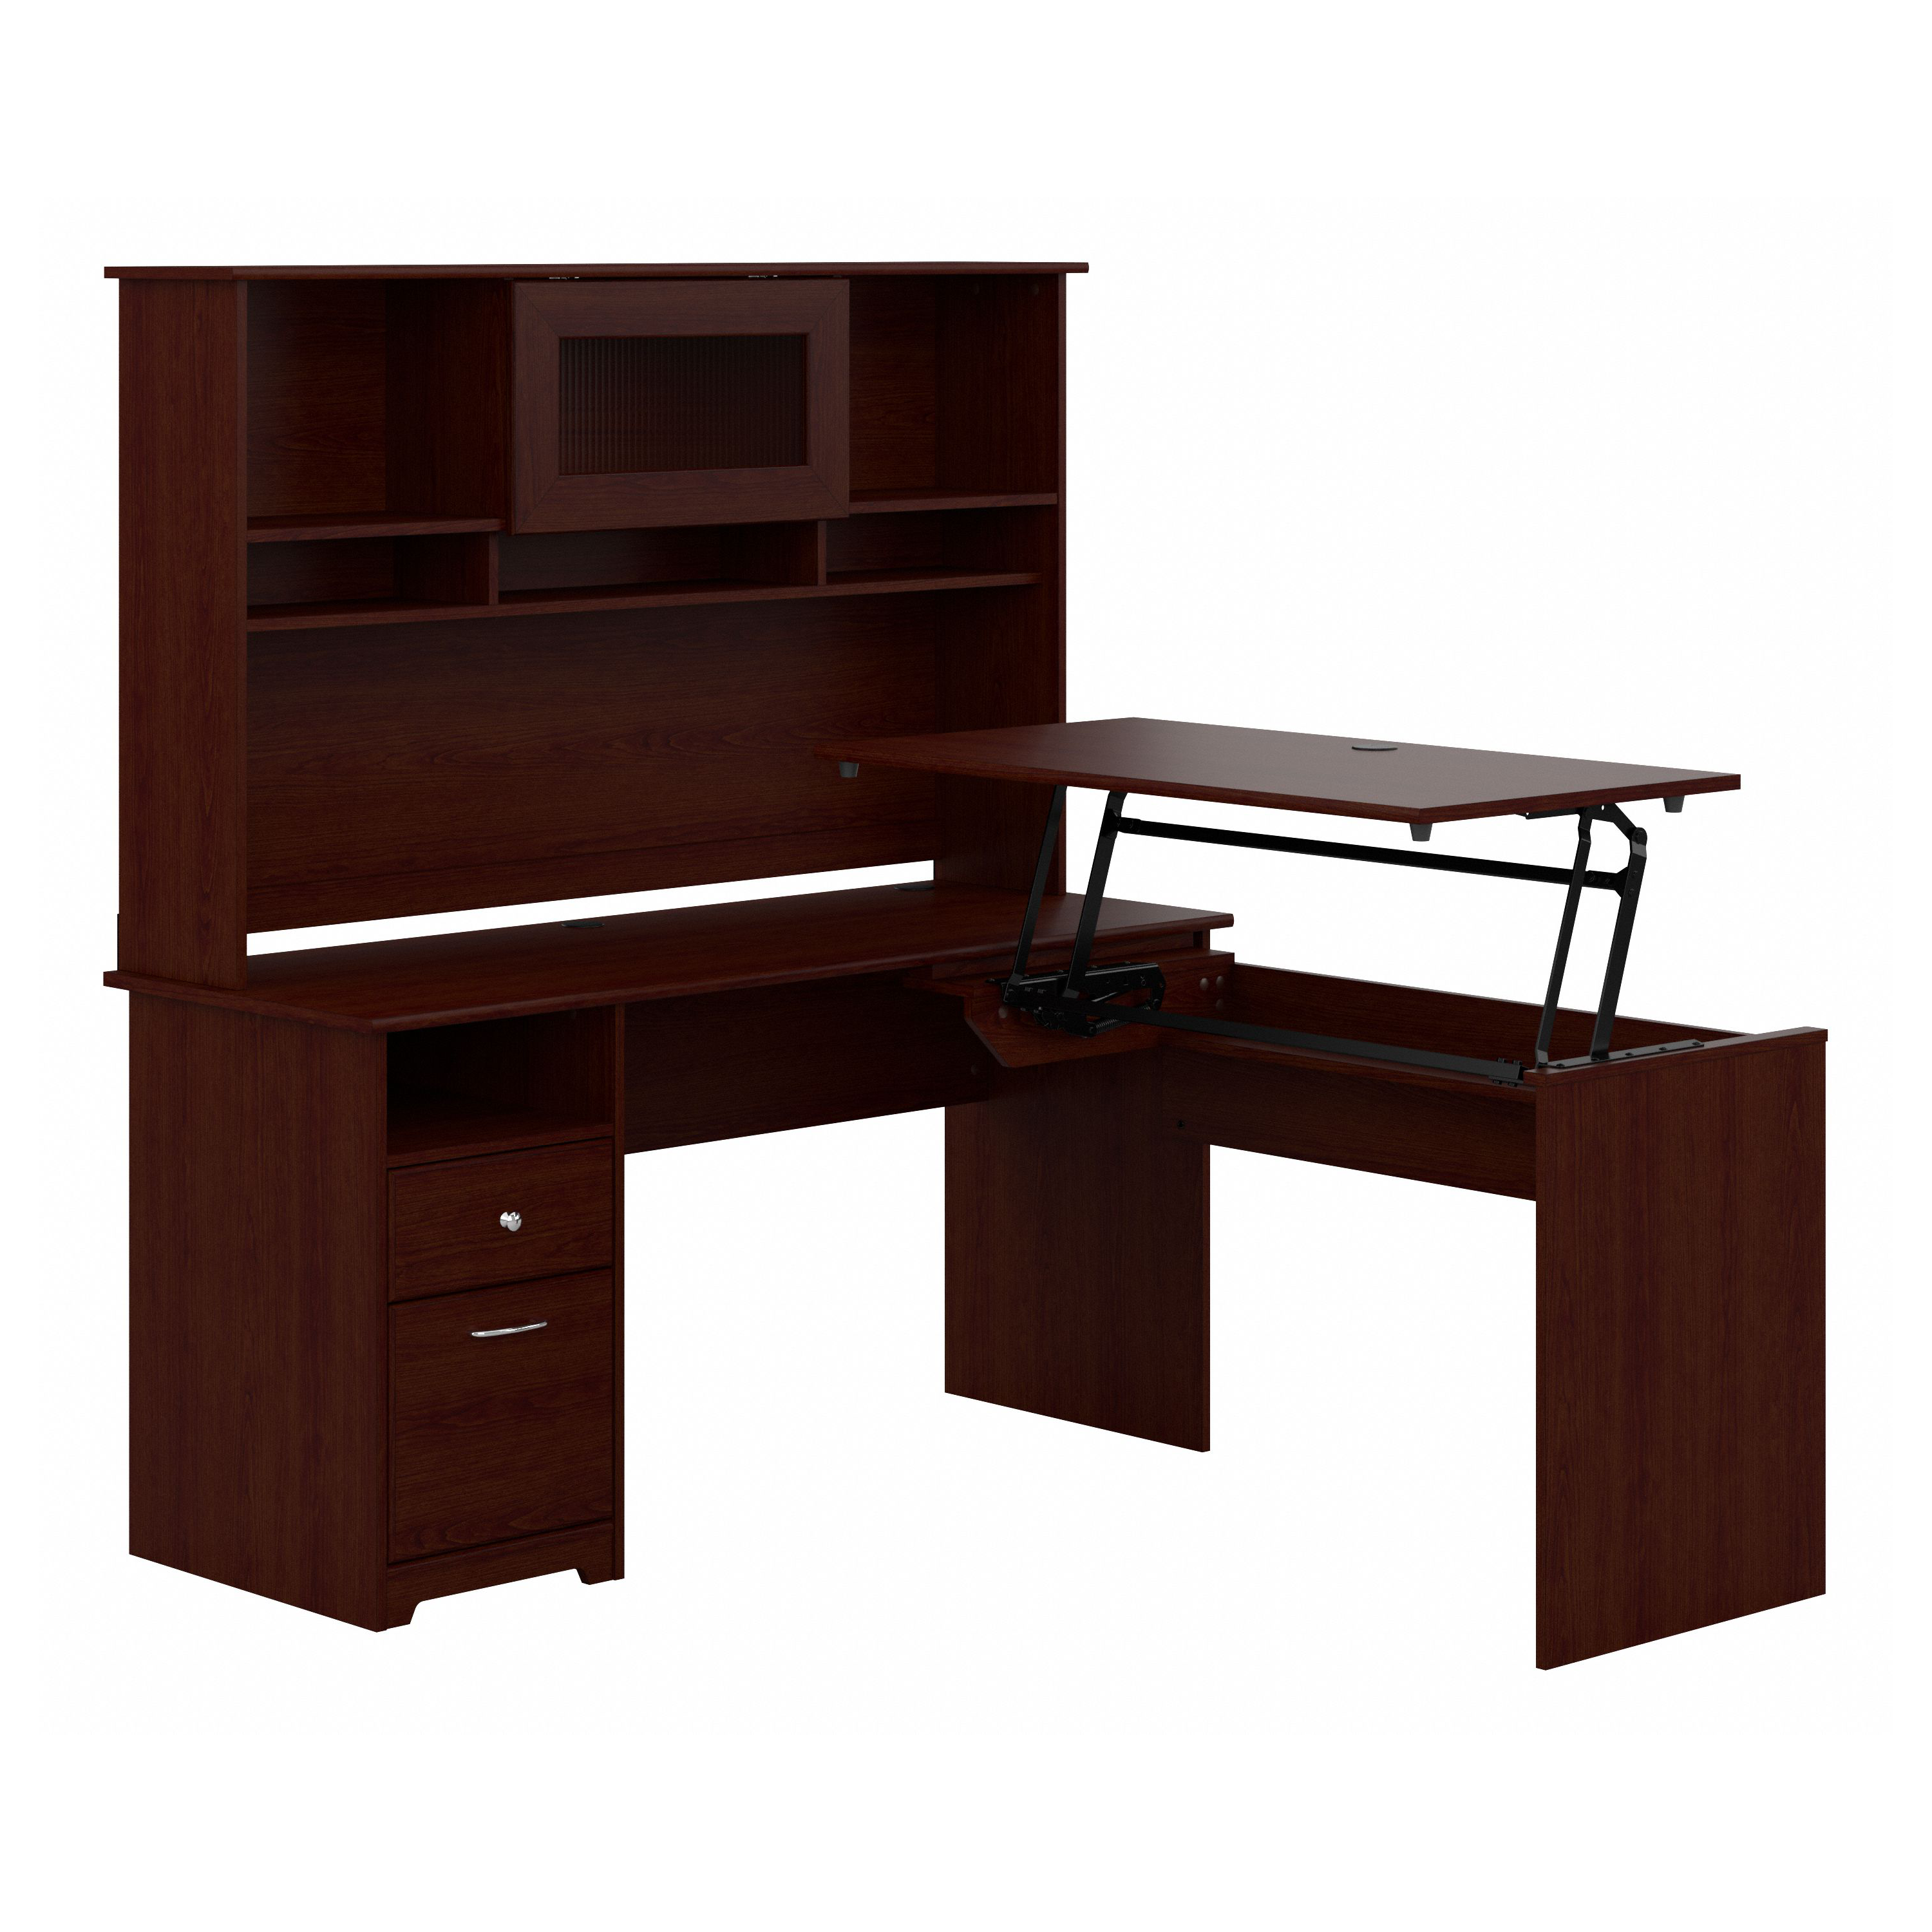 Shop Bush Furniture Cabot 60W 3 Position Sit to Stand L Shaped Desk with Hutch 02 CAB045HVC #color_harvest cherry